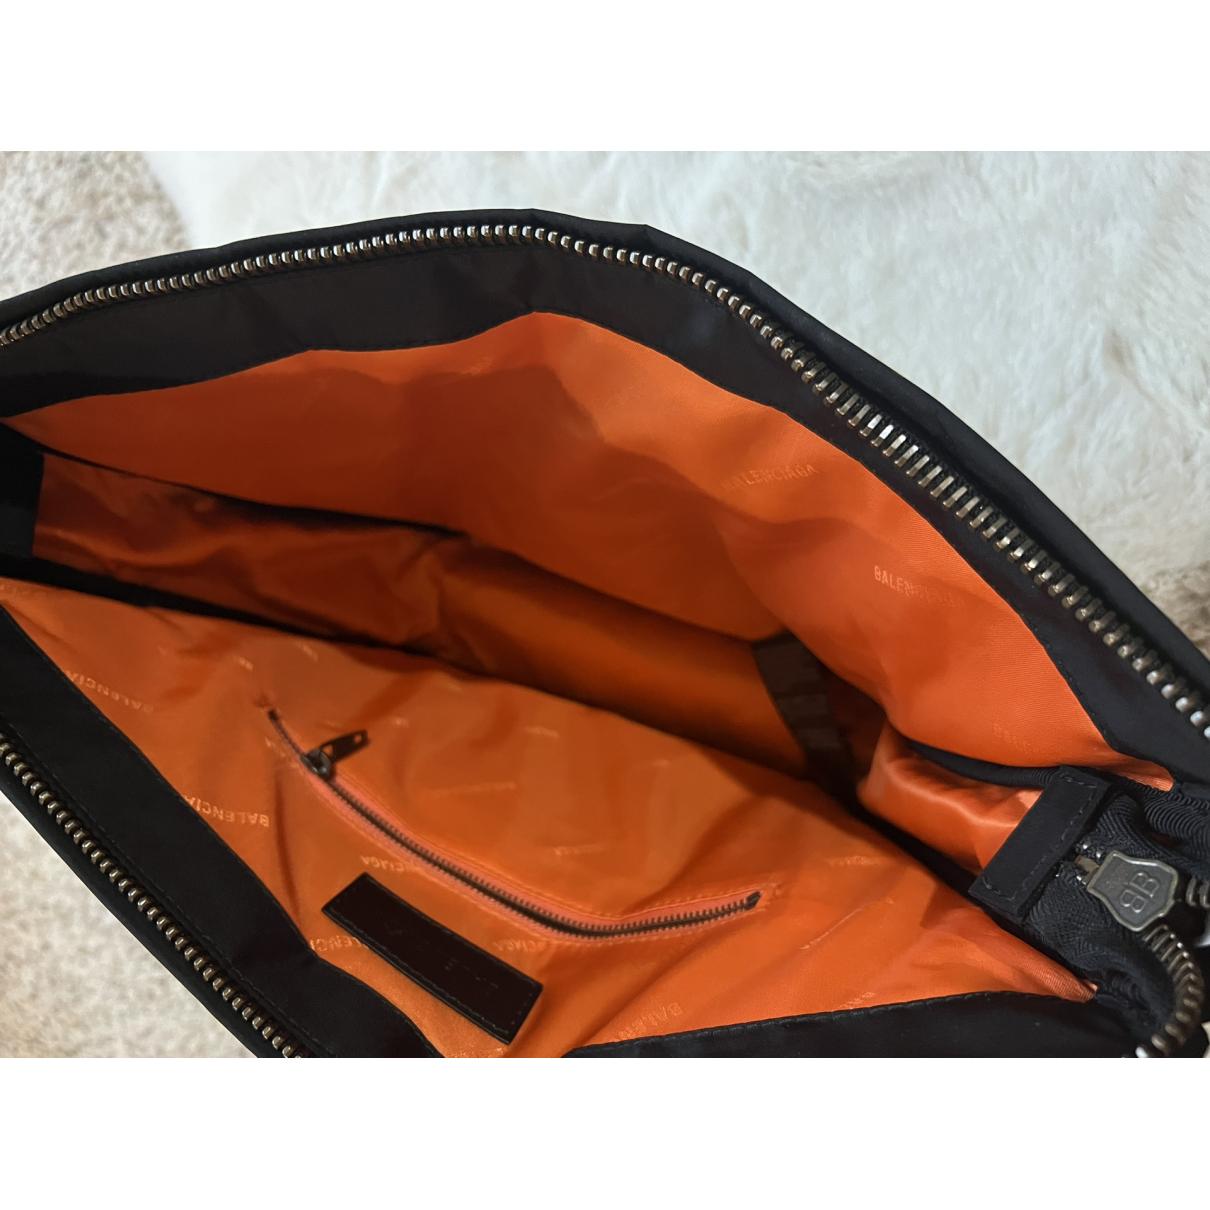 Wheel cloth handbag - 8